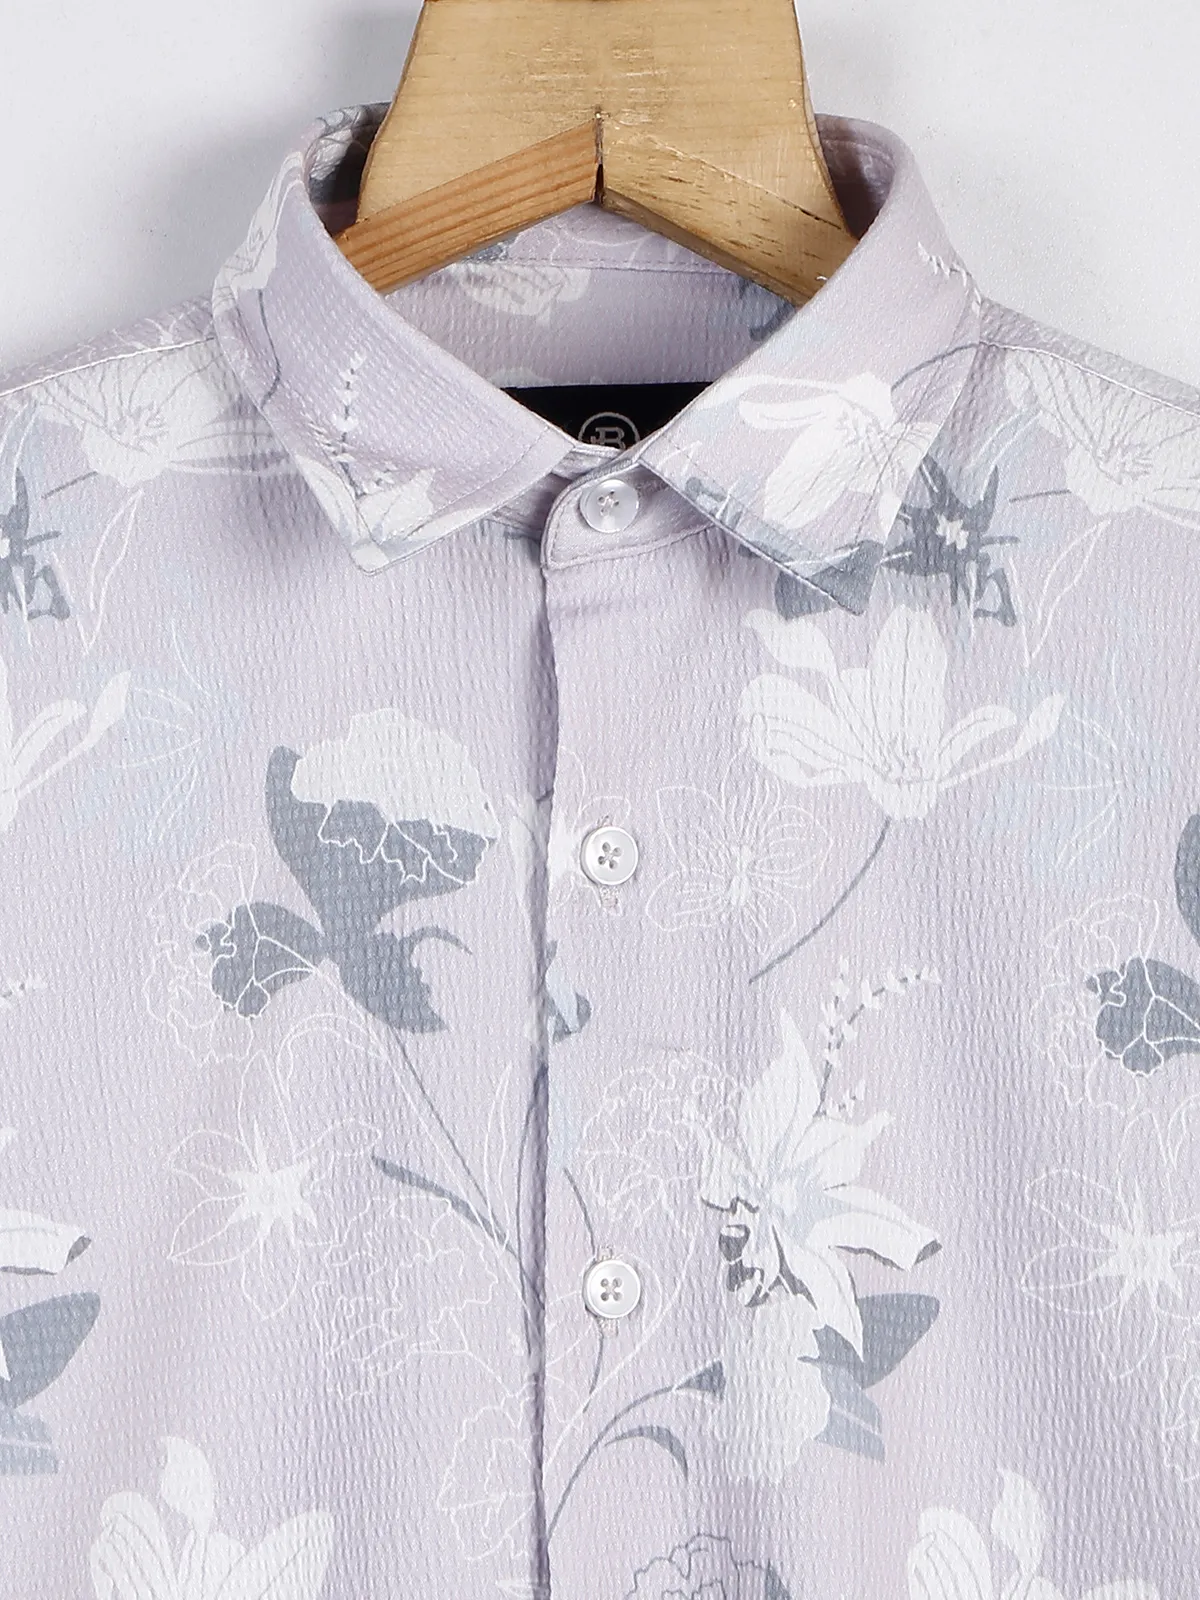 Blazo printed lilac purple cotton fabric shirt